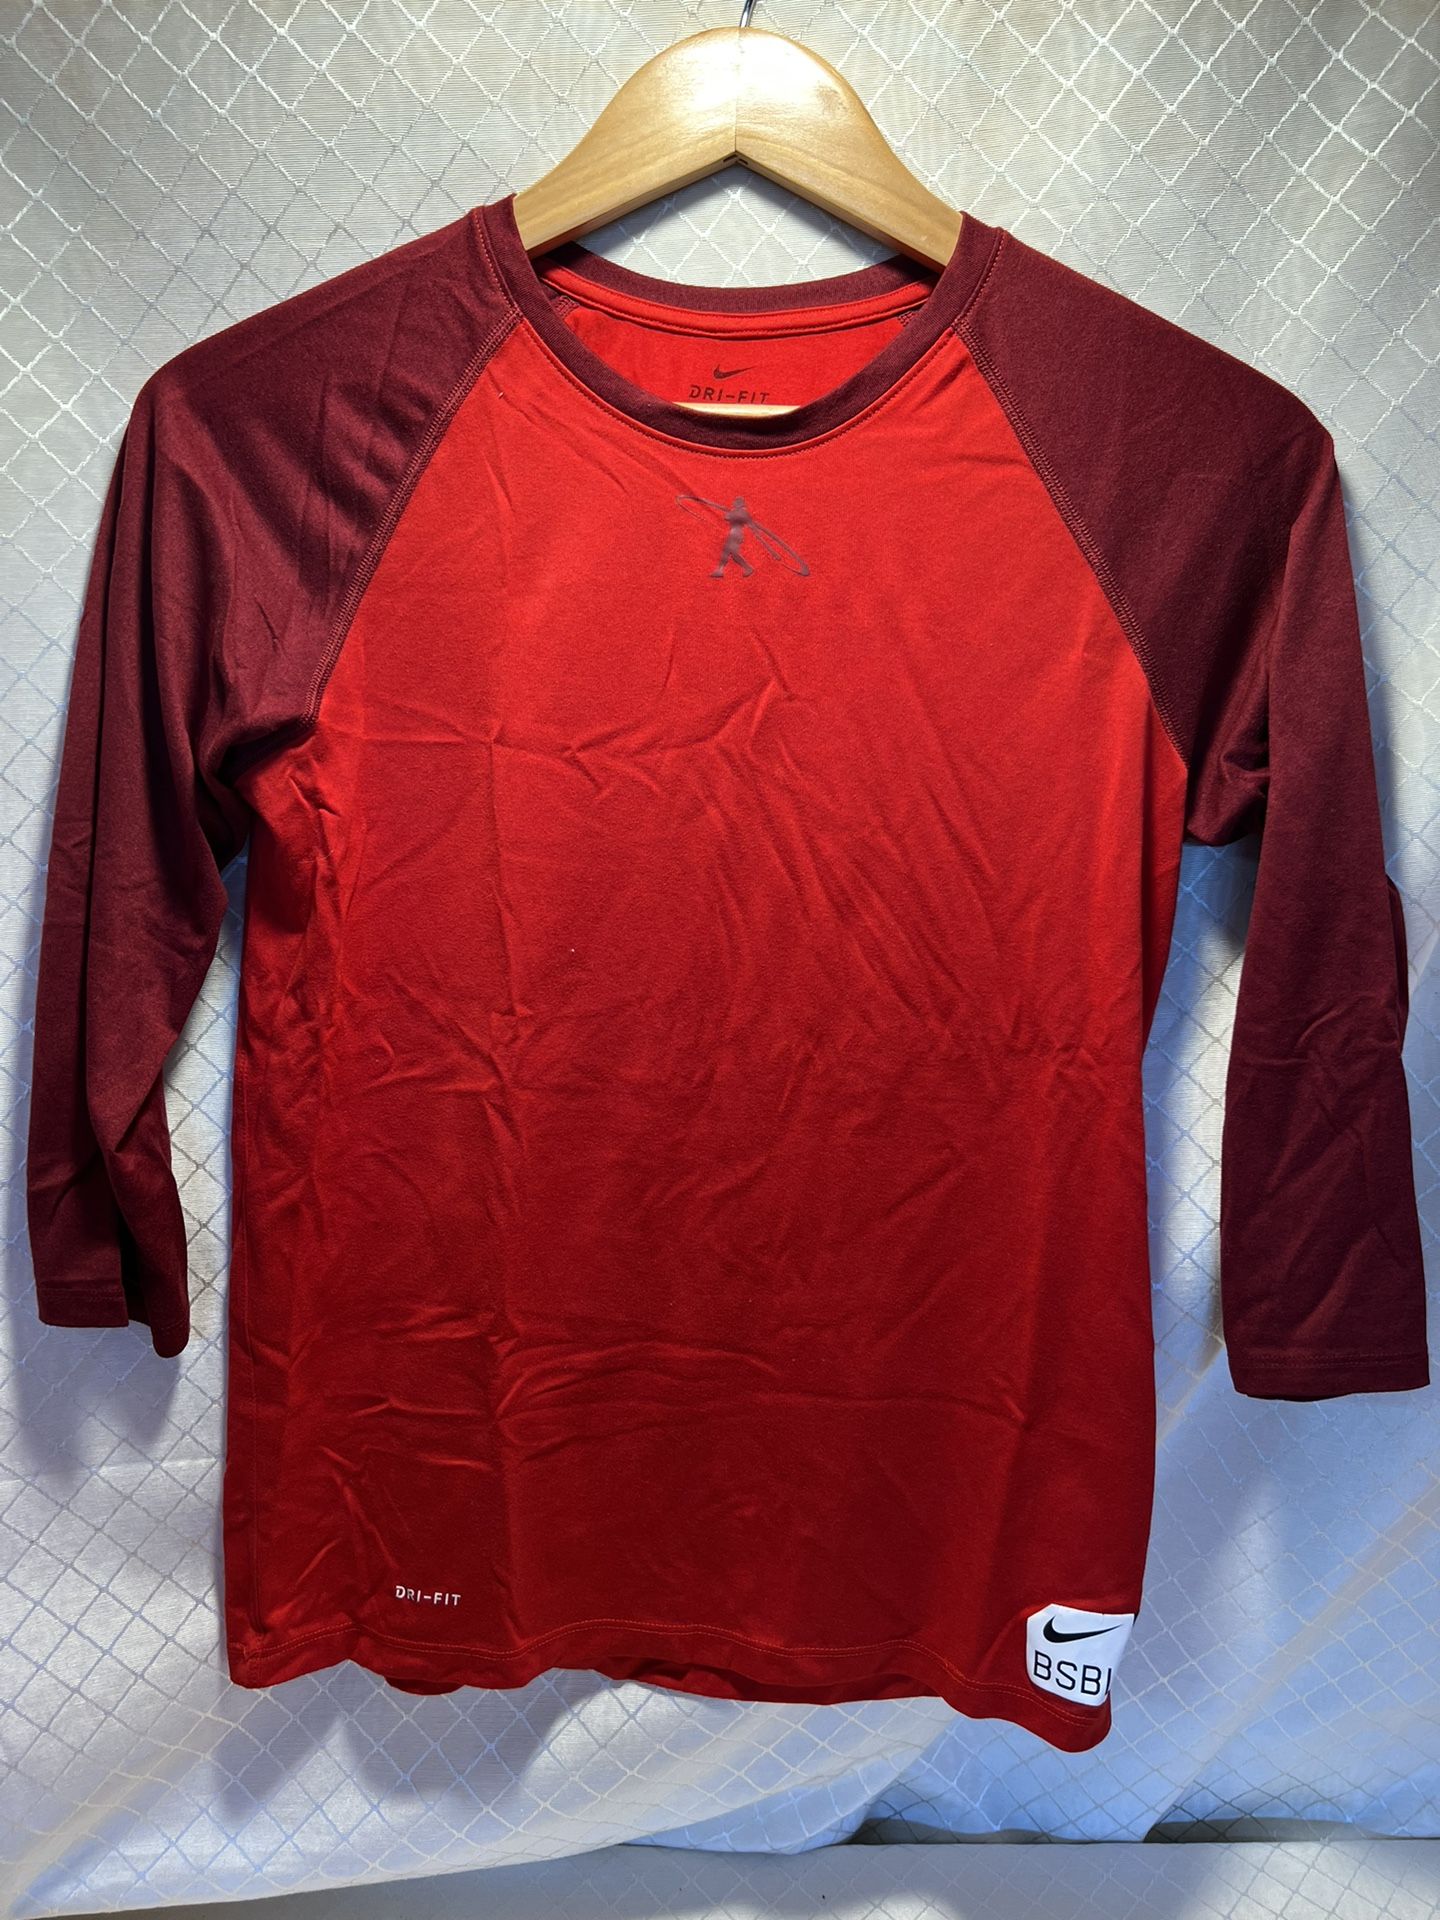 Nike Tee Dri Fit Ken Griffey Jr BSBL 3/4 Sleeve t shirt Baseball XL Youth 